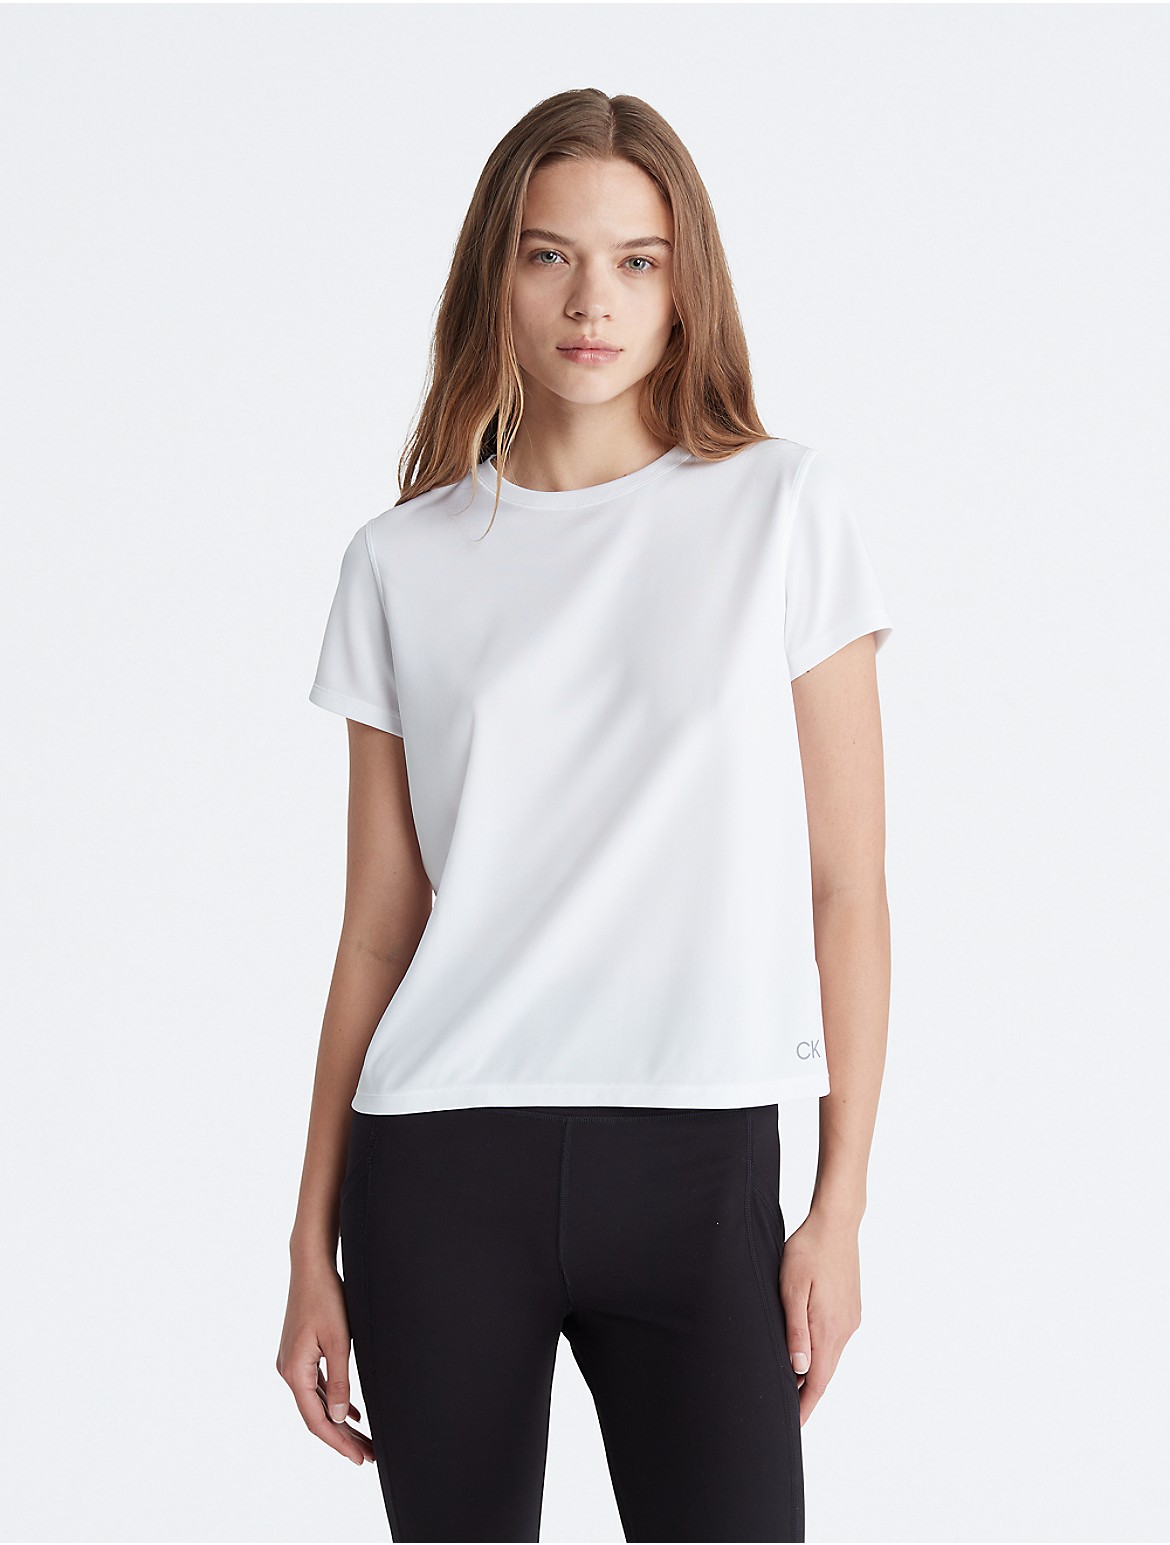 Calvin Klein Women's Performance Tech Pique T-Shirt - White - L